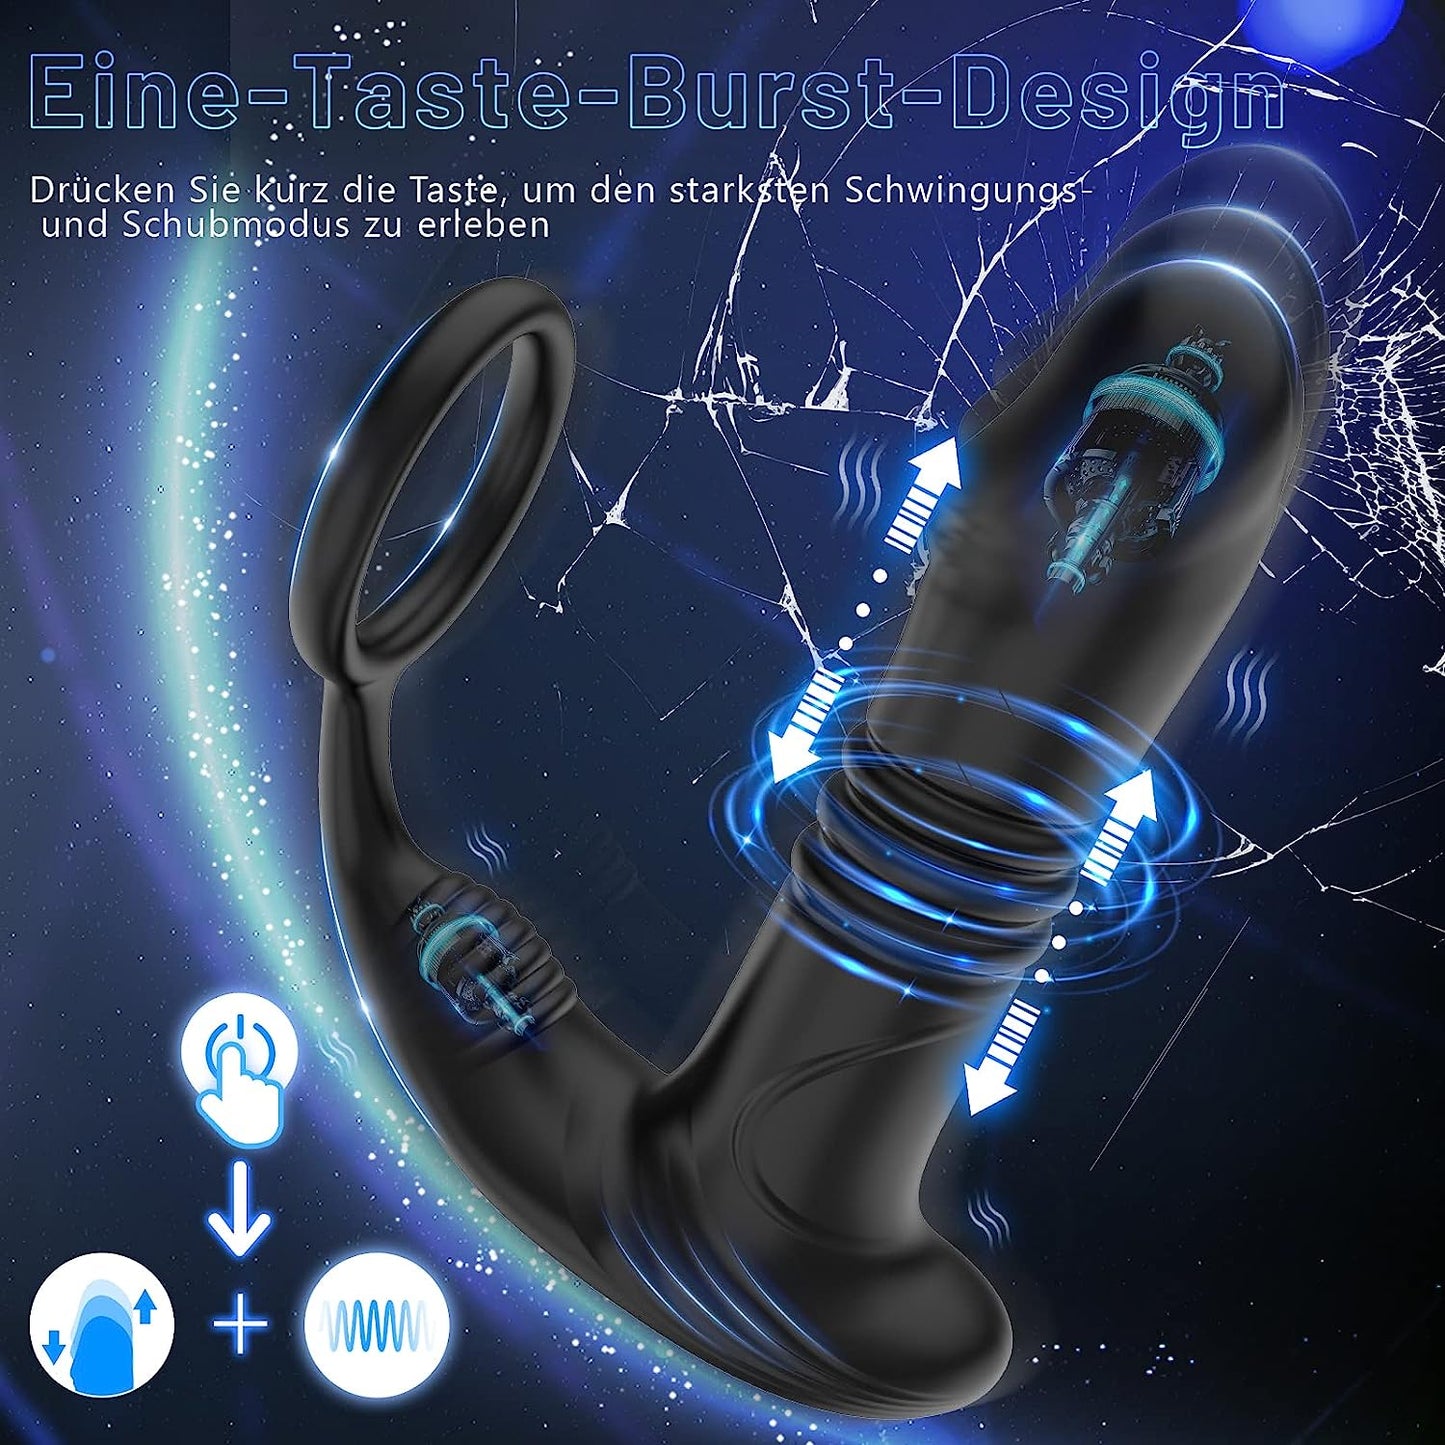 6 telescopic modes 9 vibration modes app anal vibrators large with shock function prostate vibrator 